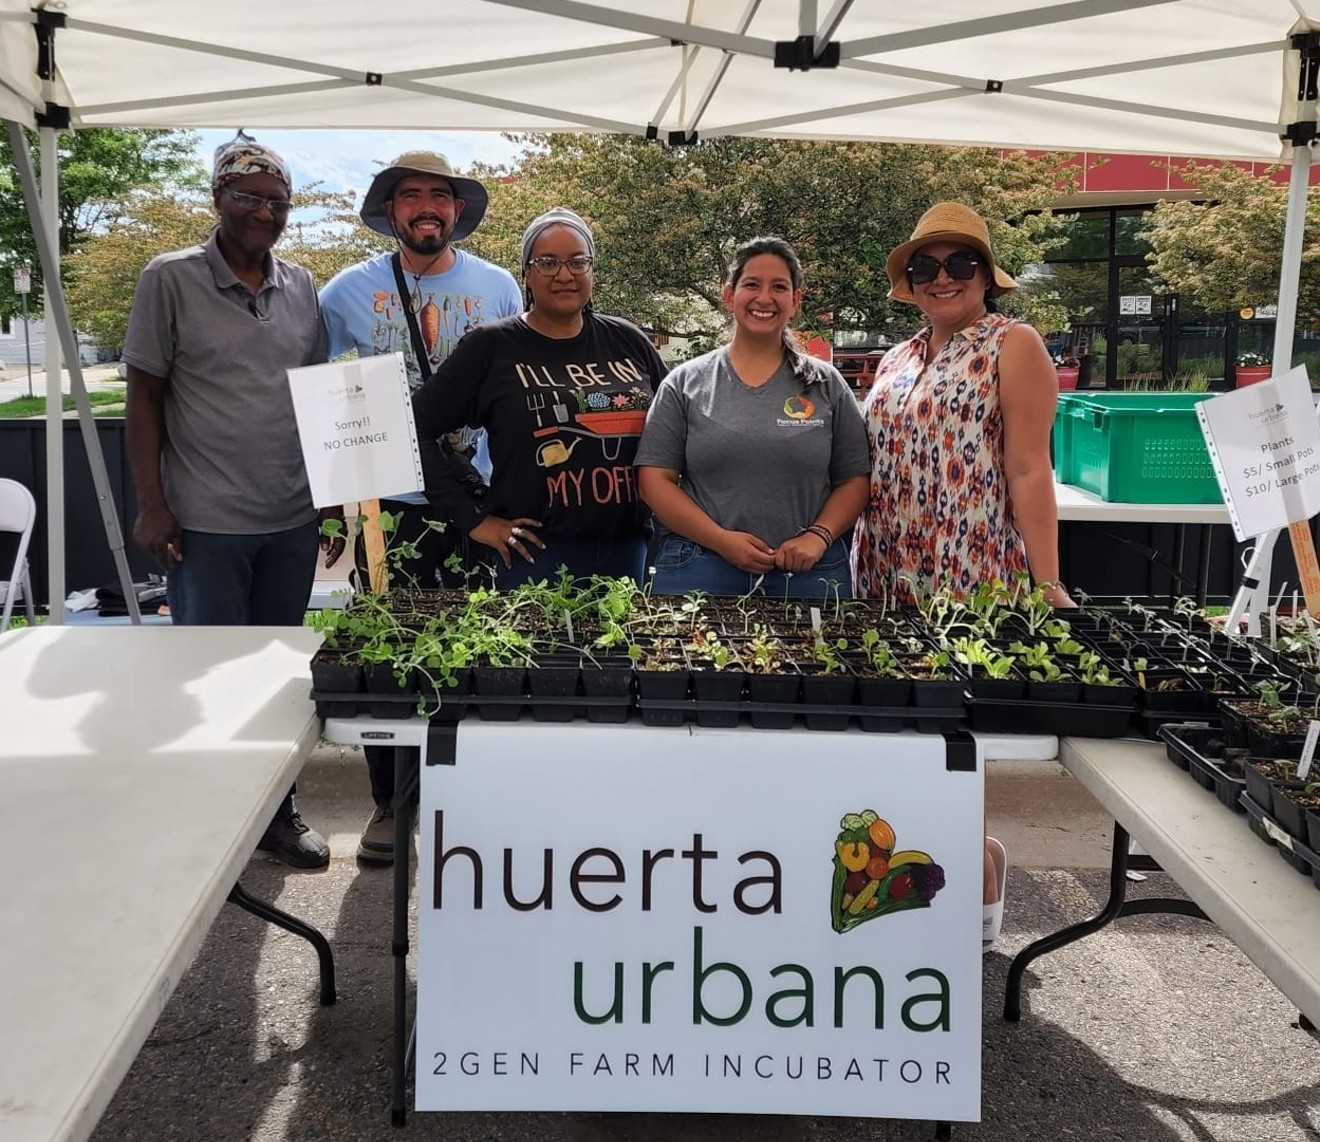 Huerta Urbana 2gen Farm Incubator program participants and staff at the June 10 opening.